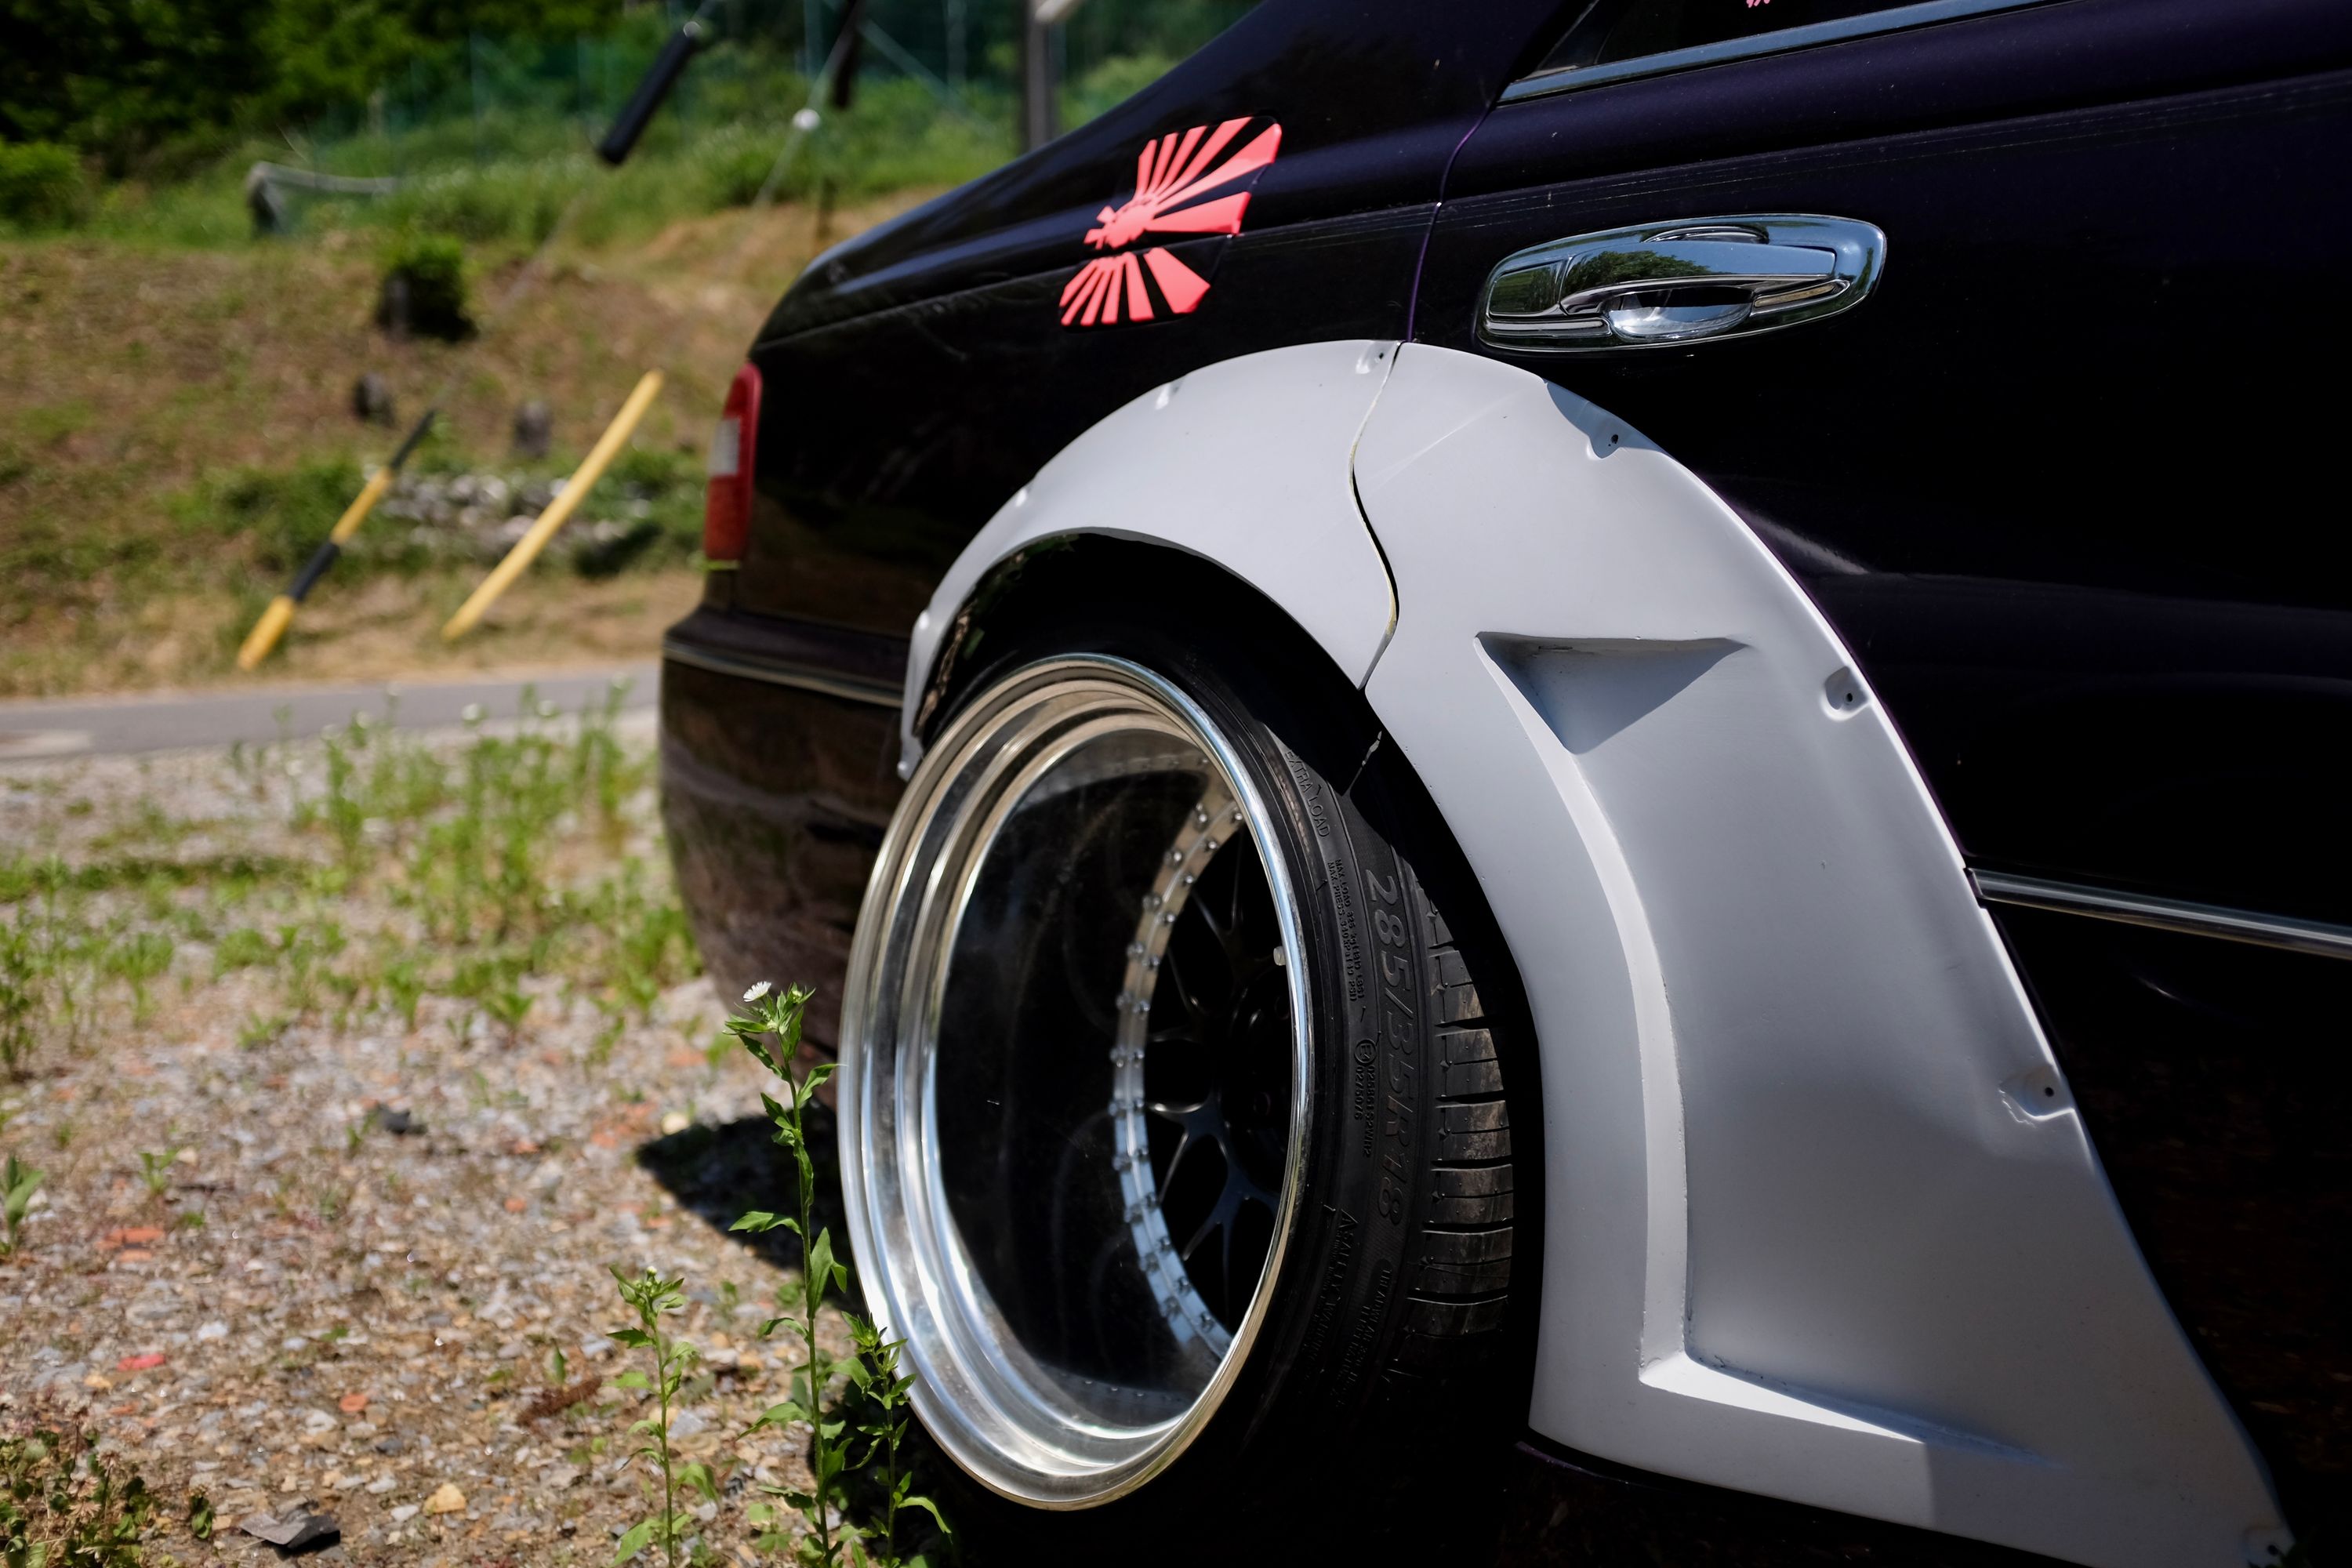 Closeup of a rear wheel of the bosozuku-style purple Nissan.